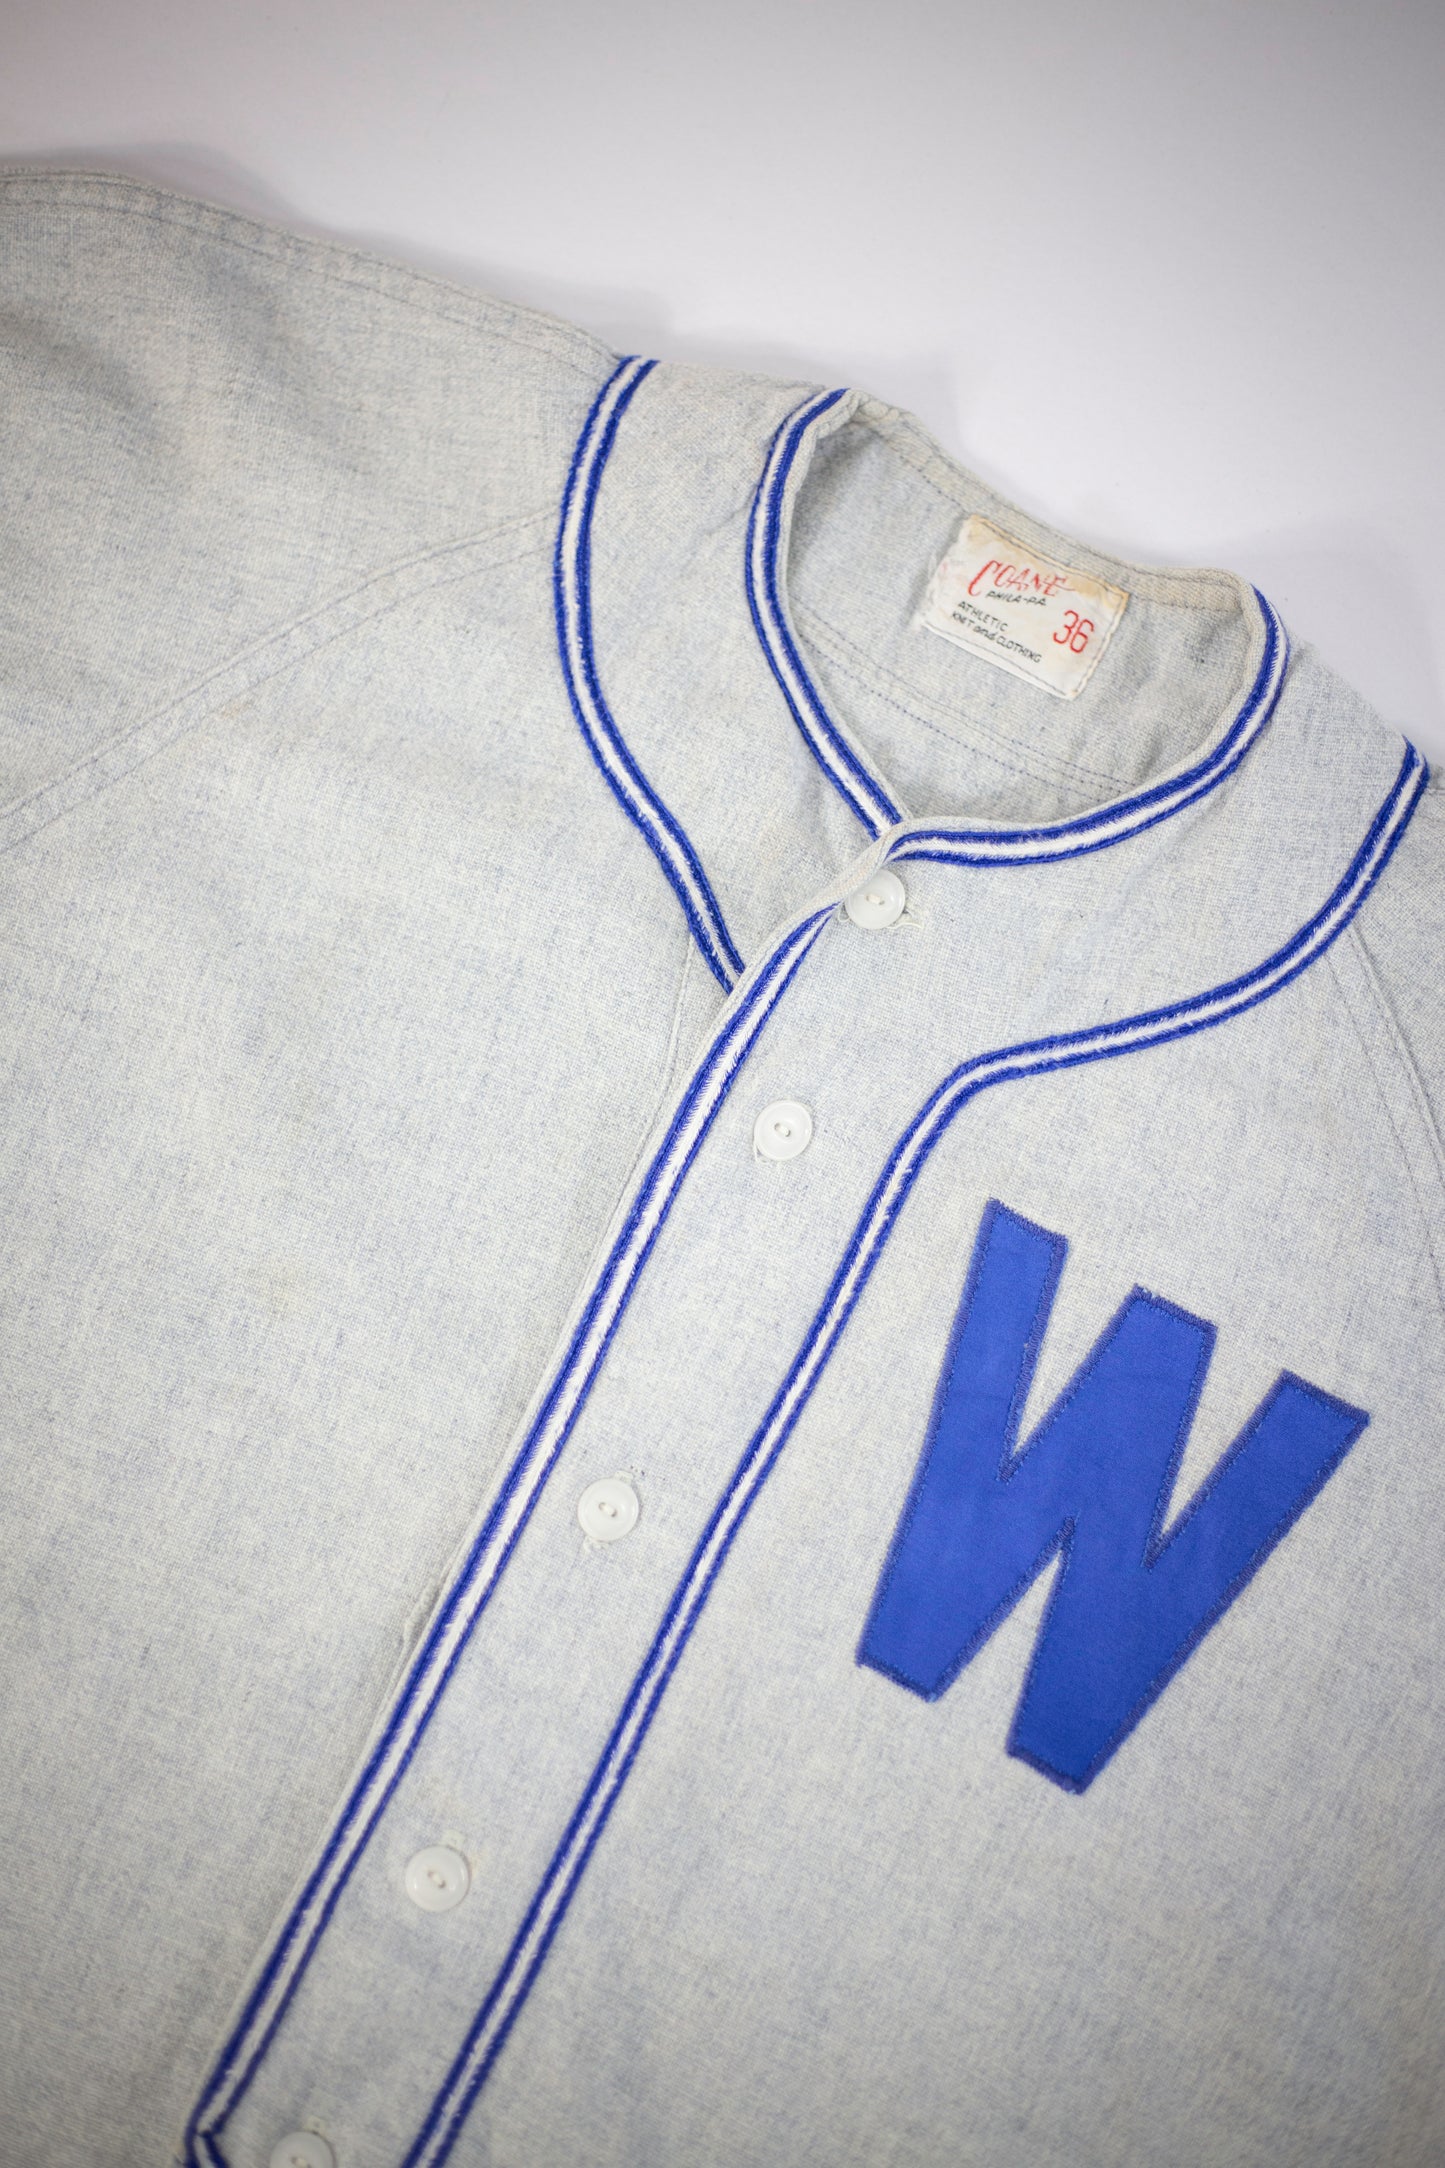 50's Coane Baseball Jersey | Medium